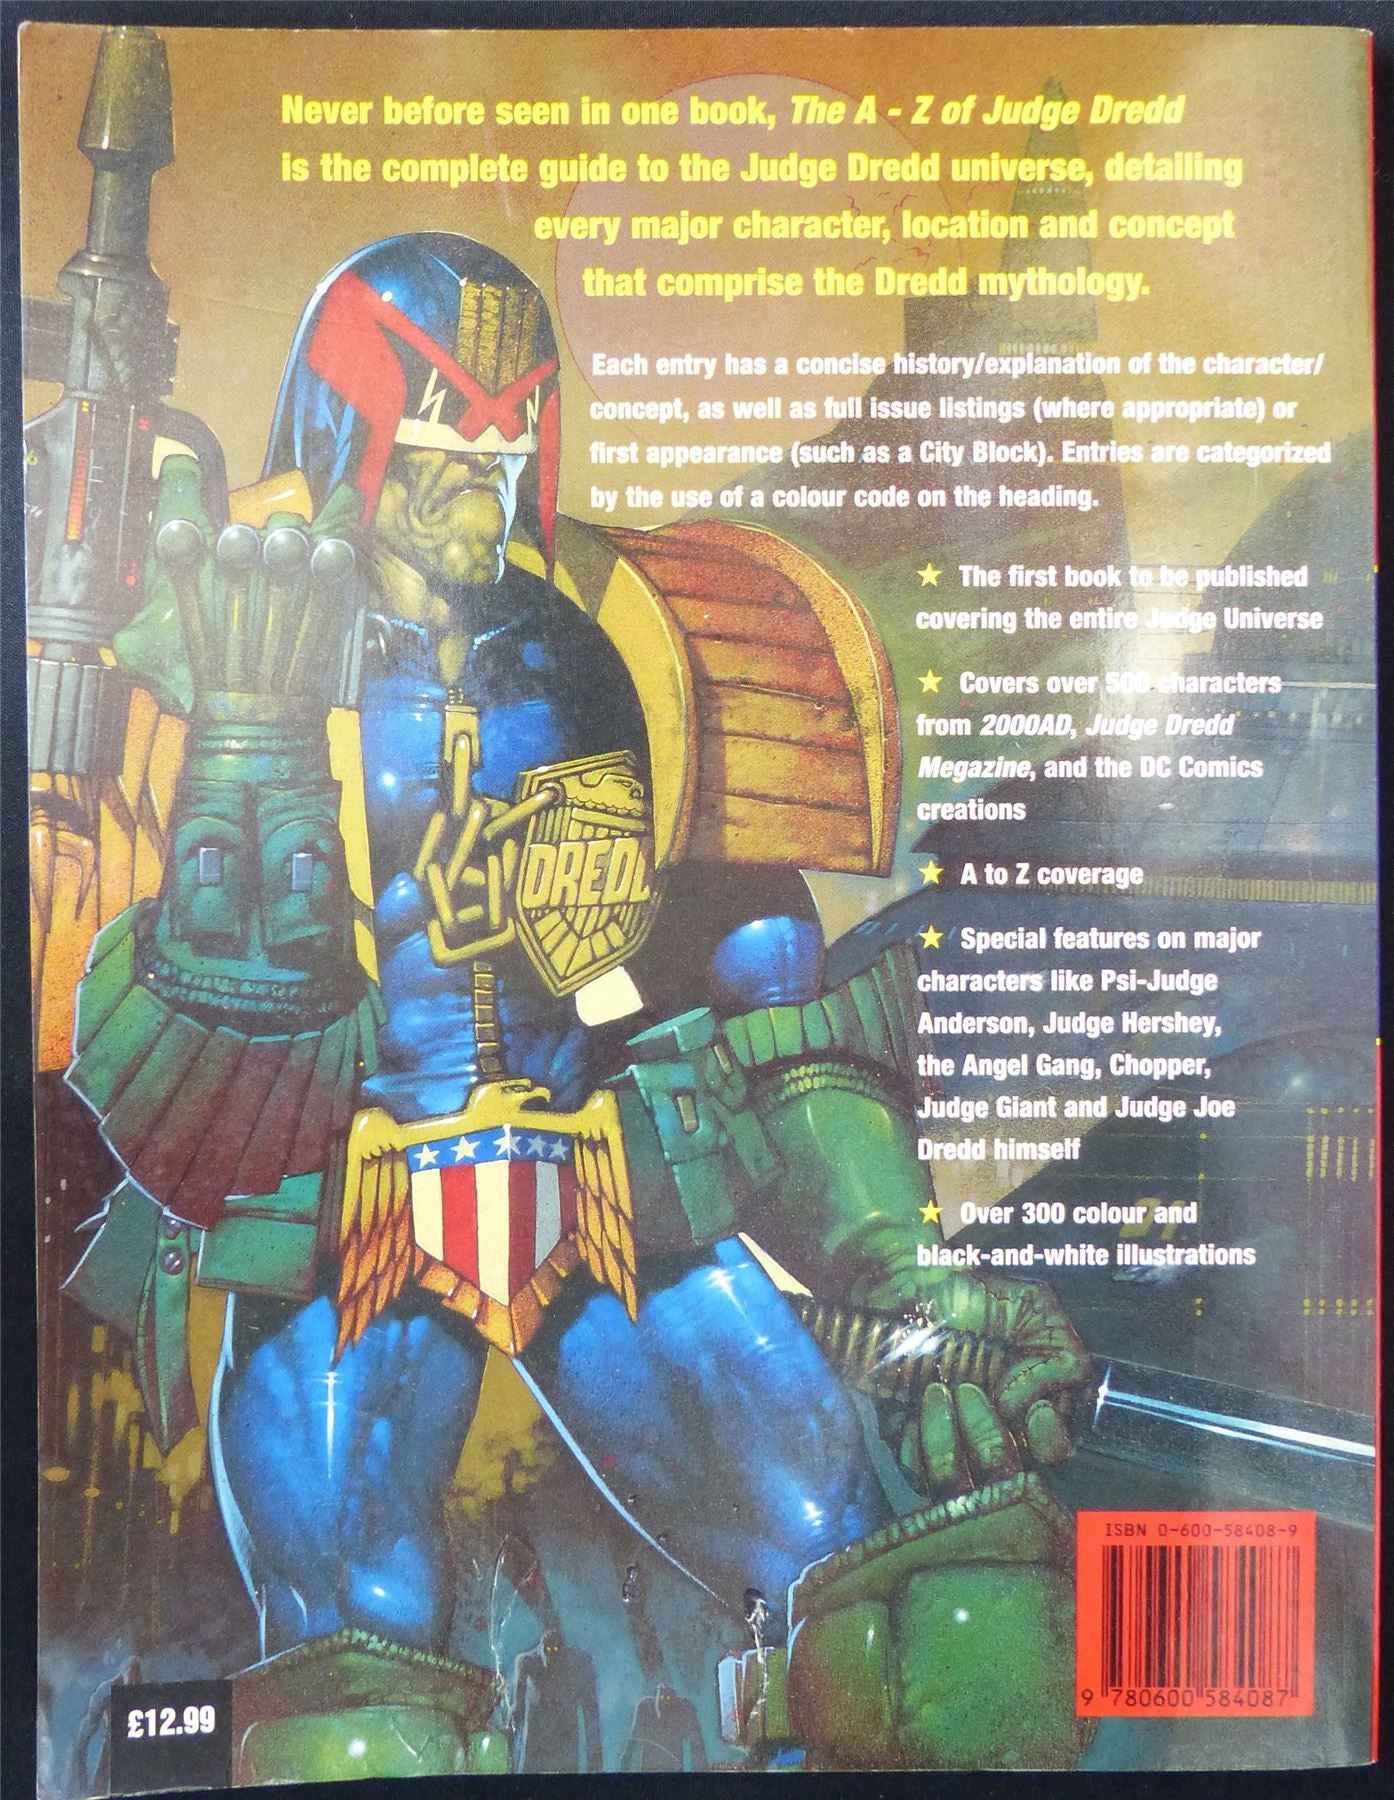 The A-Z of JUDGE Dredd - 2000AD Graphic Softback #2MG